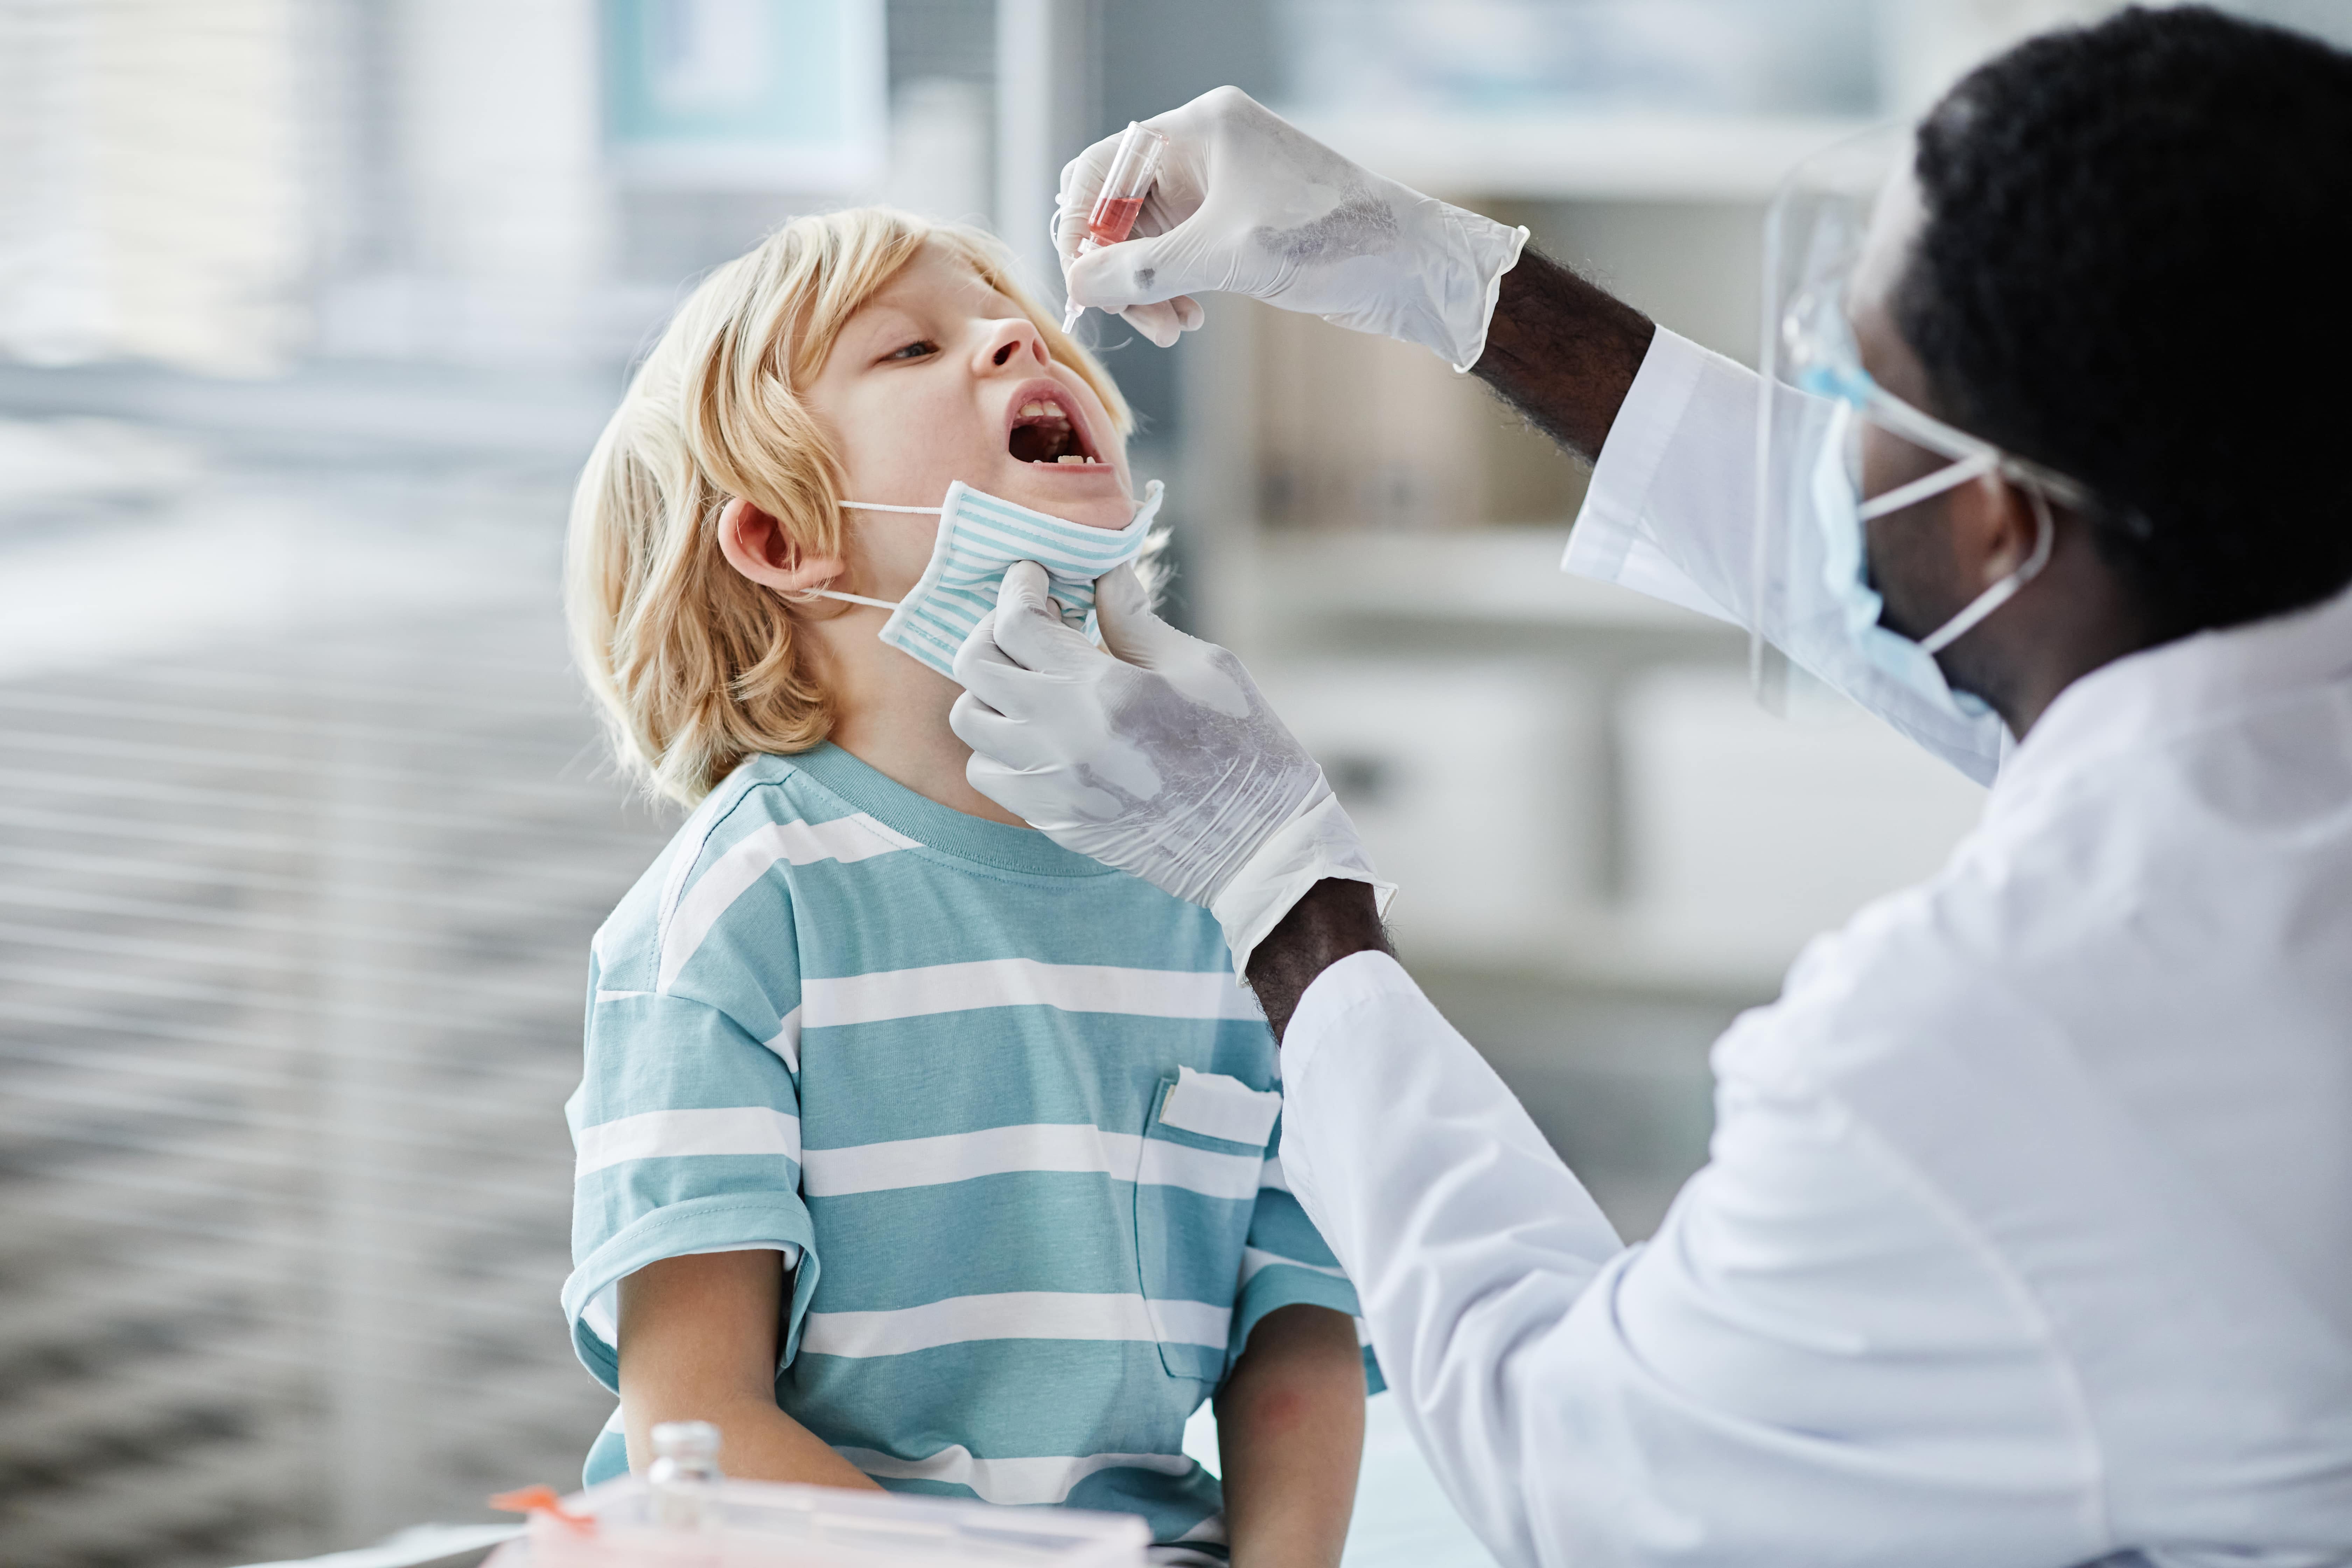 Oral Health During Flu Season